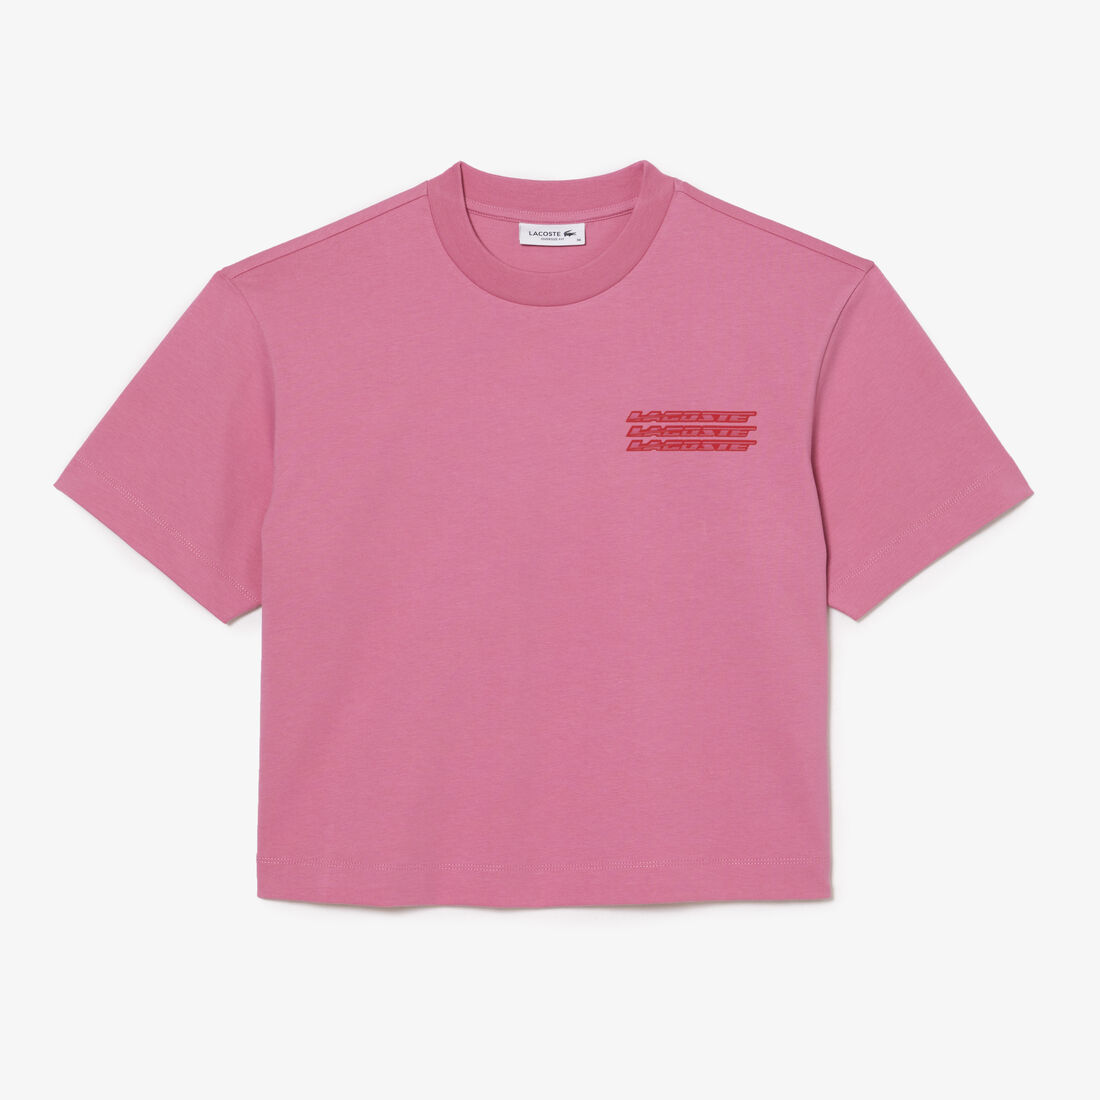 Lacoste Oversized Baumwoll Jersey T-shirts Damen Rosa | YPQG-48357